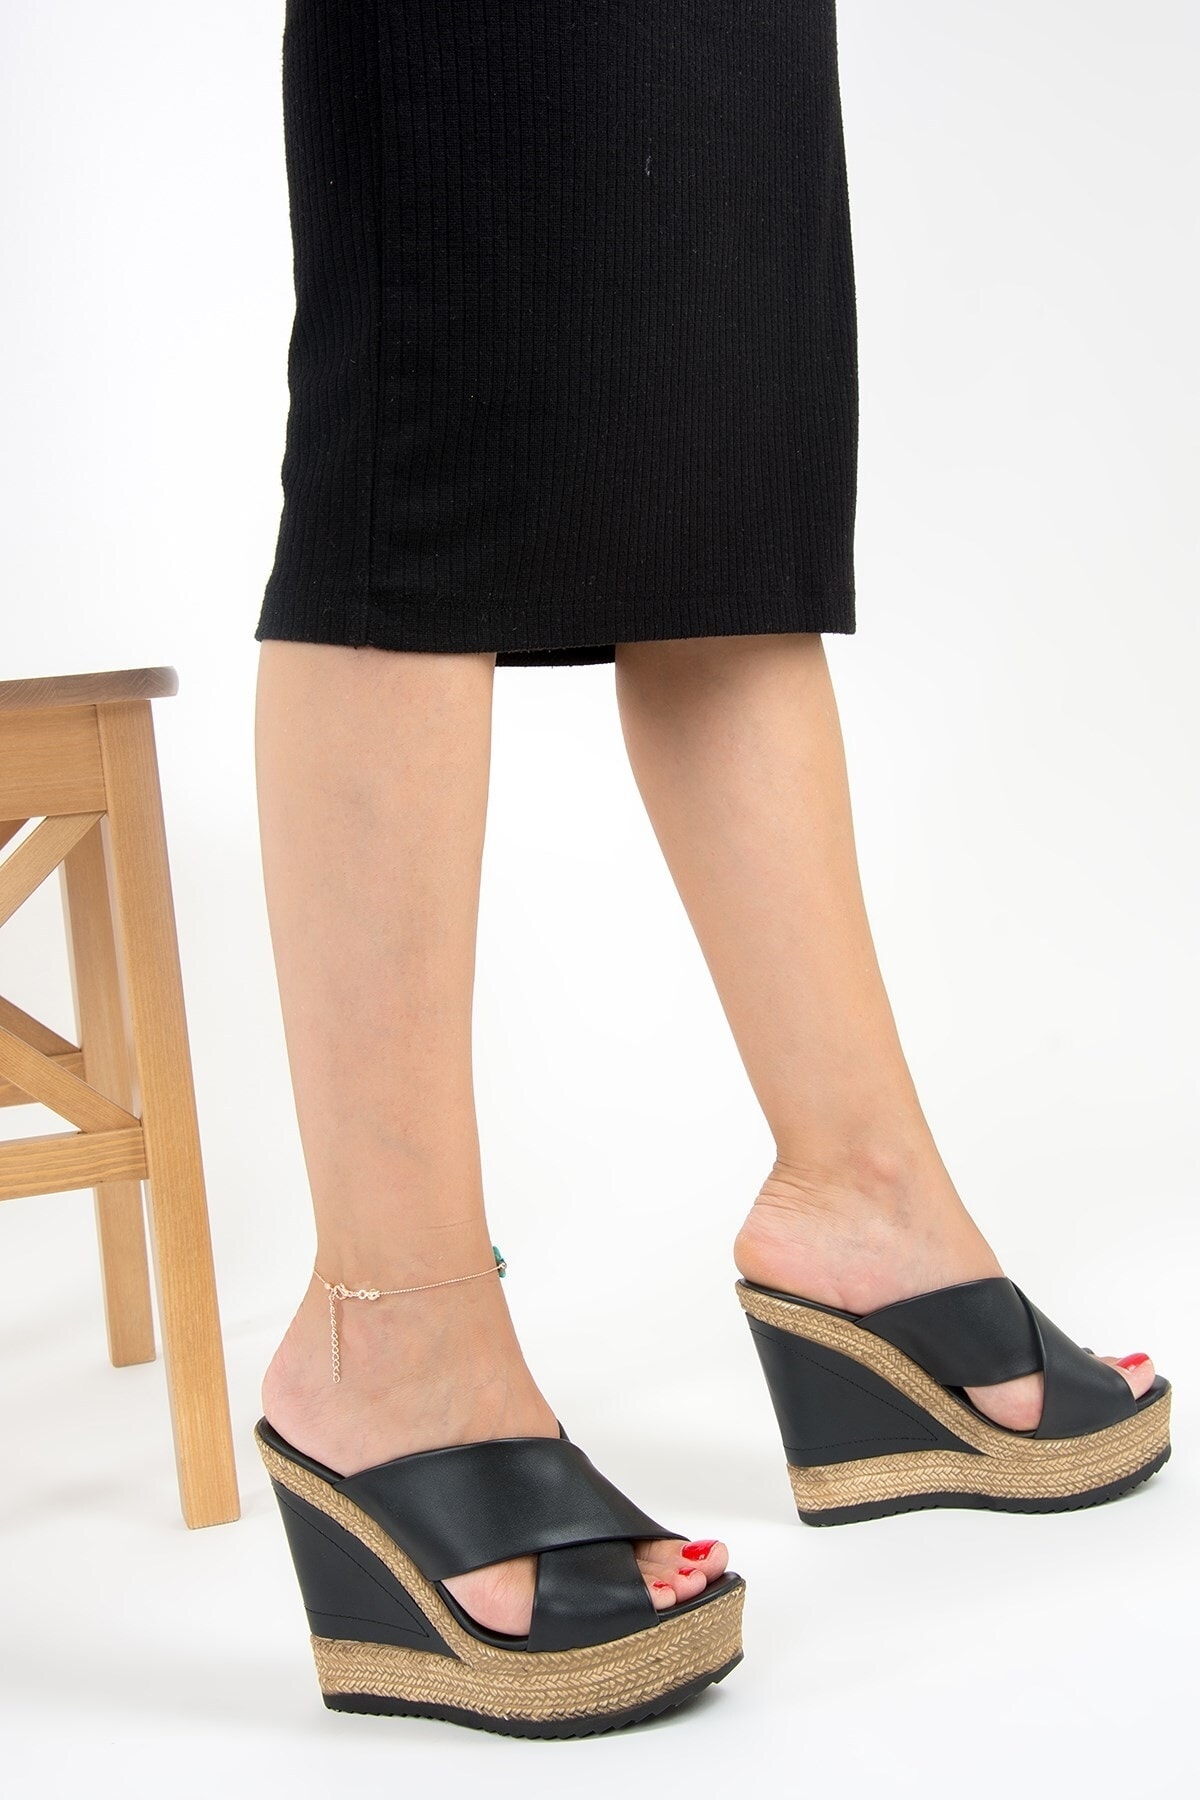 Fox Shoes Women's Black Heeled Slippers